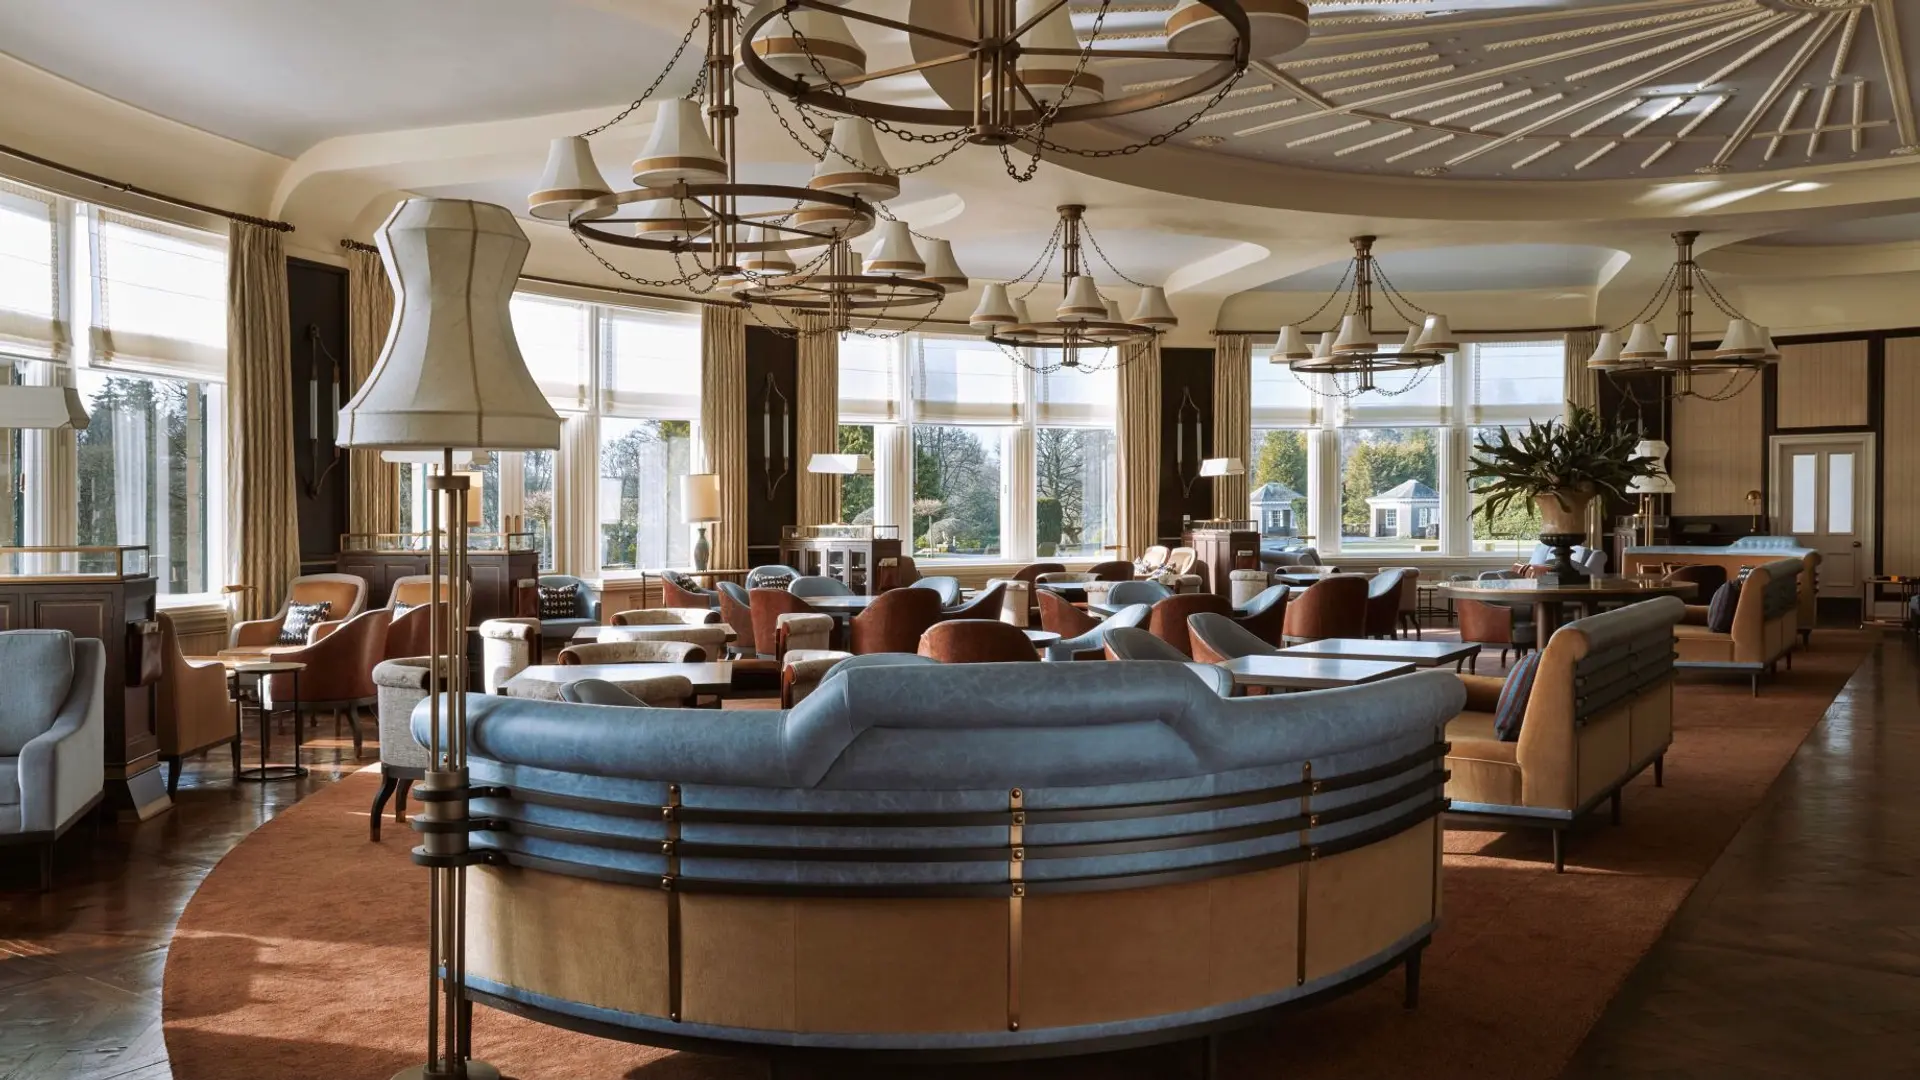 Hotel review Service & Facilities' - The Gleneagles Hotel - 5